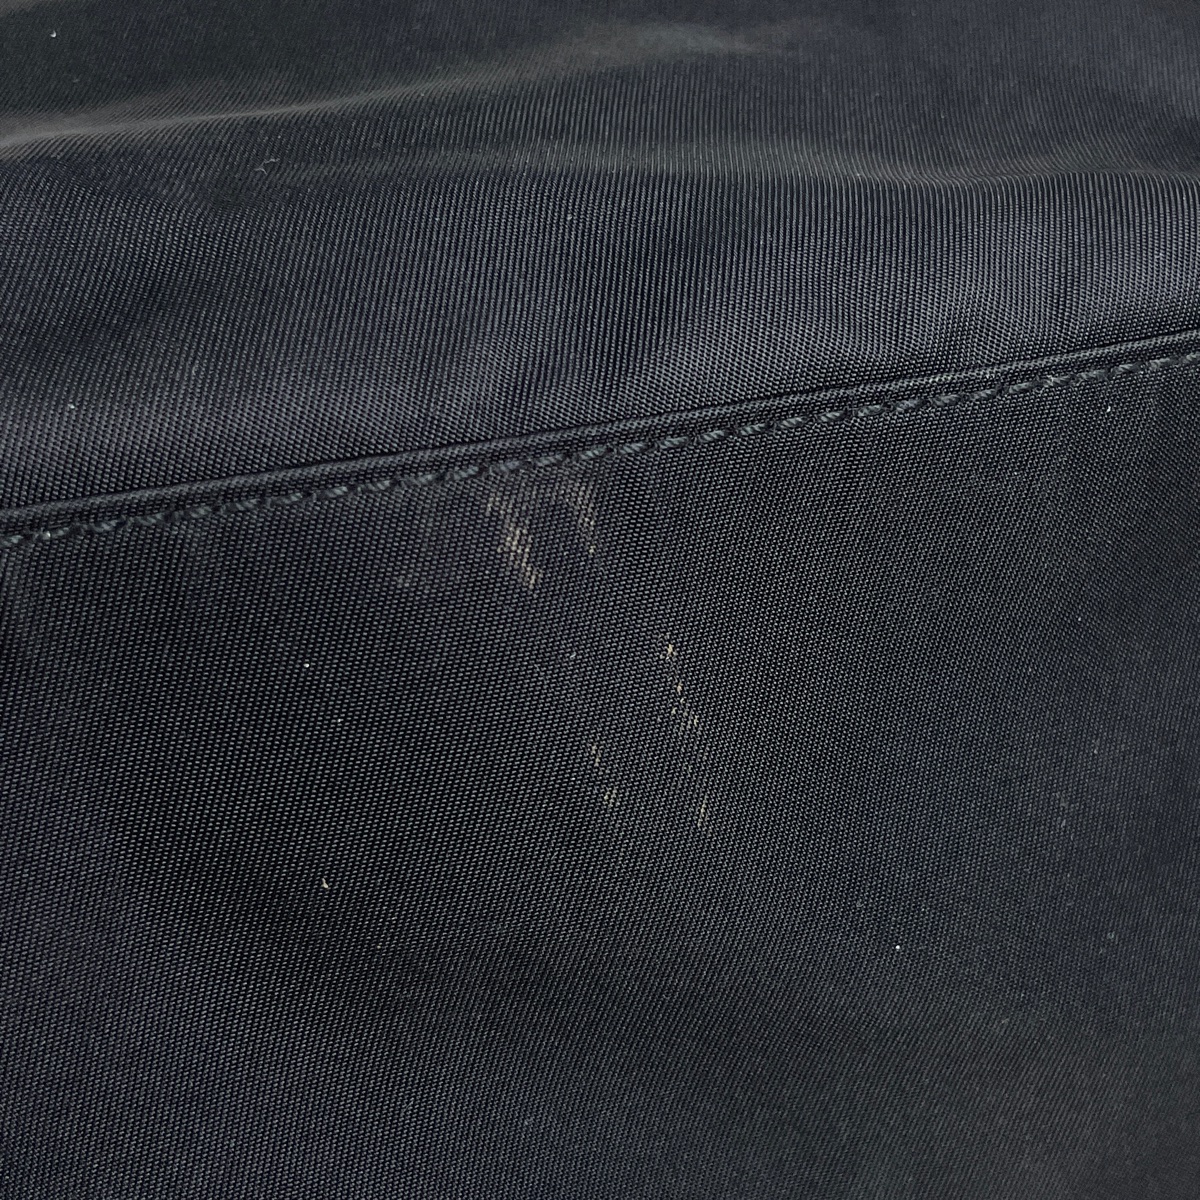  Prada PRADA Logo plate handbag 2WAY shoulder bag handbag nylon Nero ( black ) lady's used 